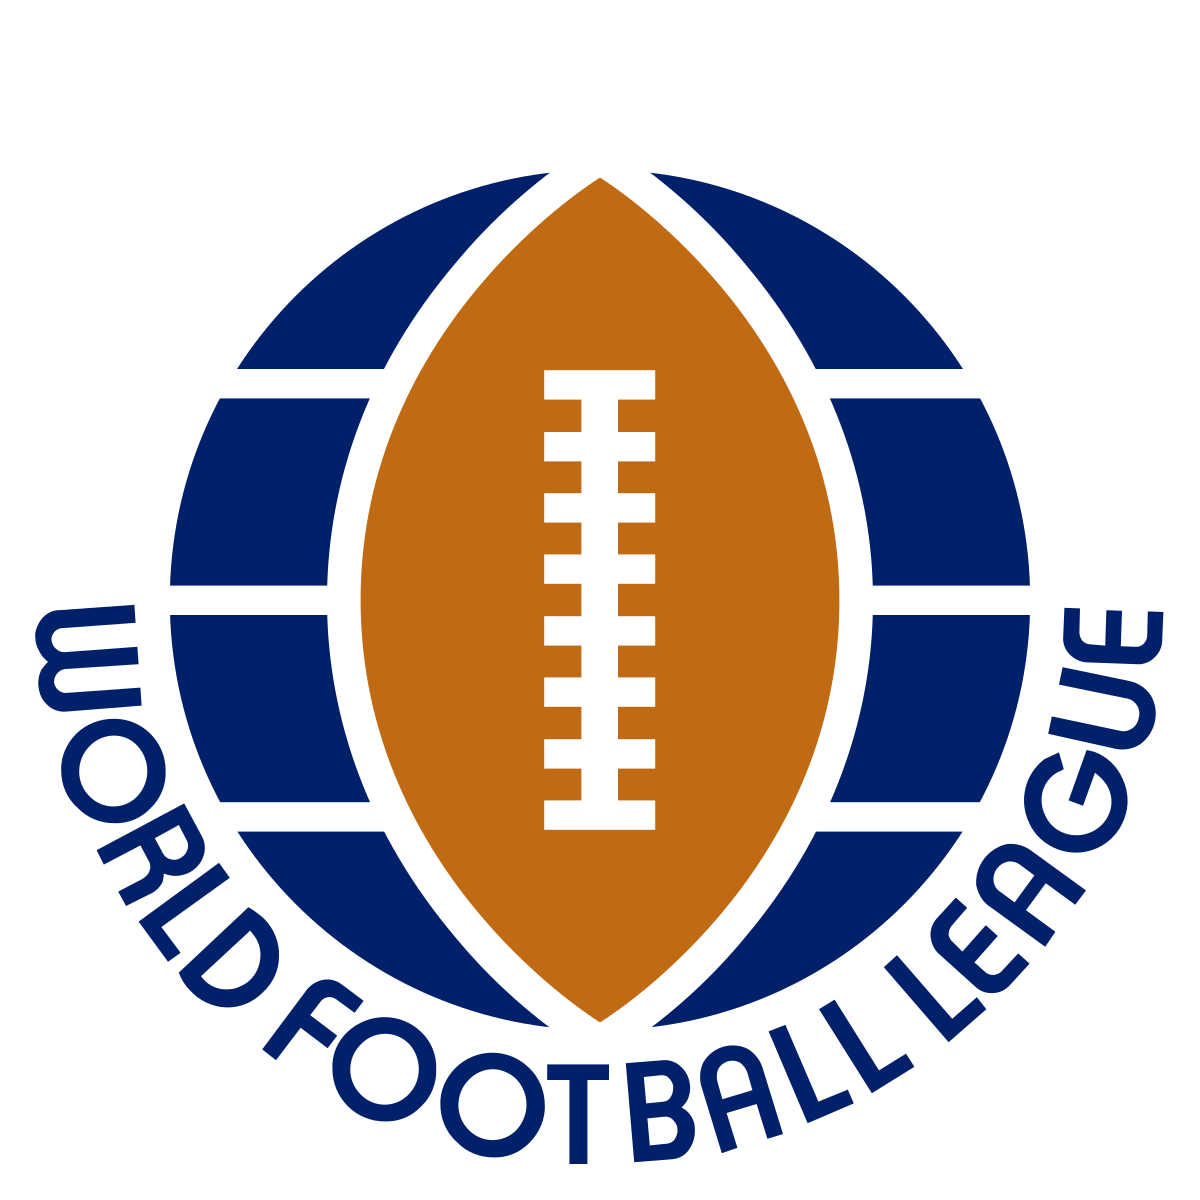 National Football League on television - Wikipedia